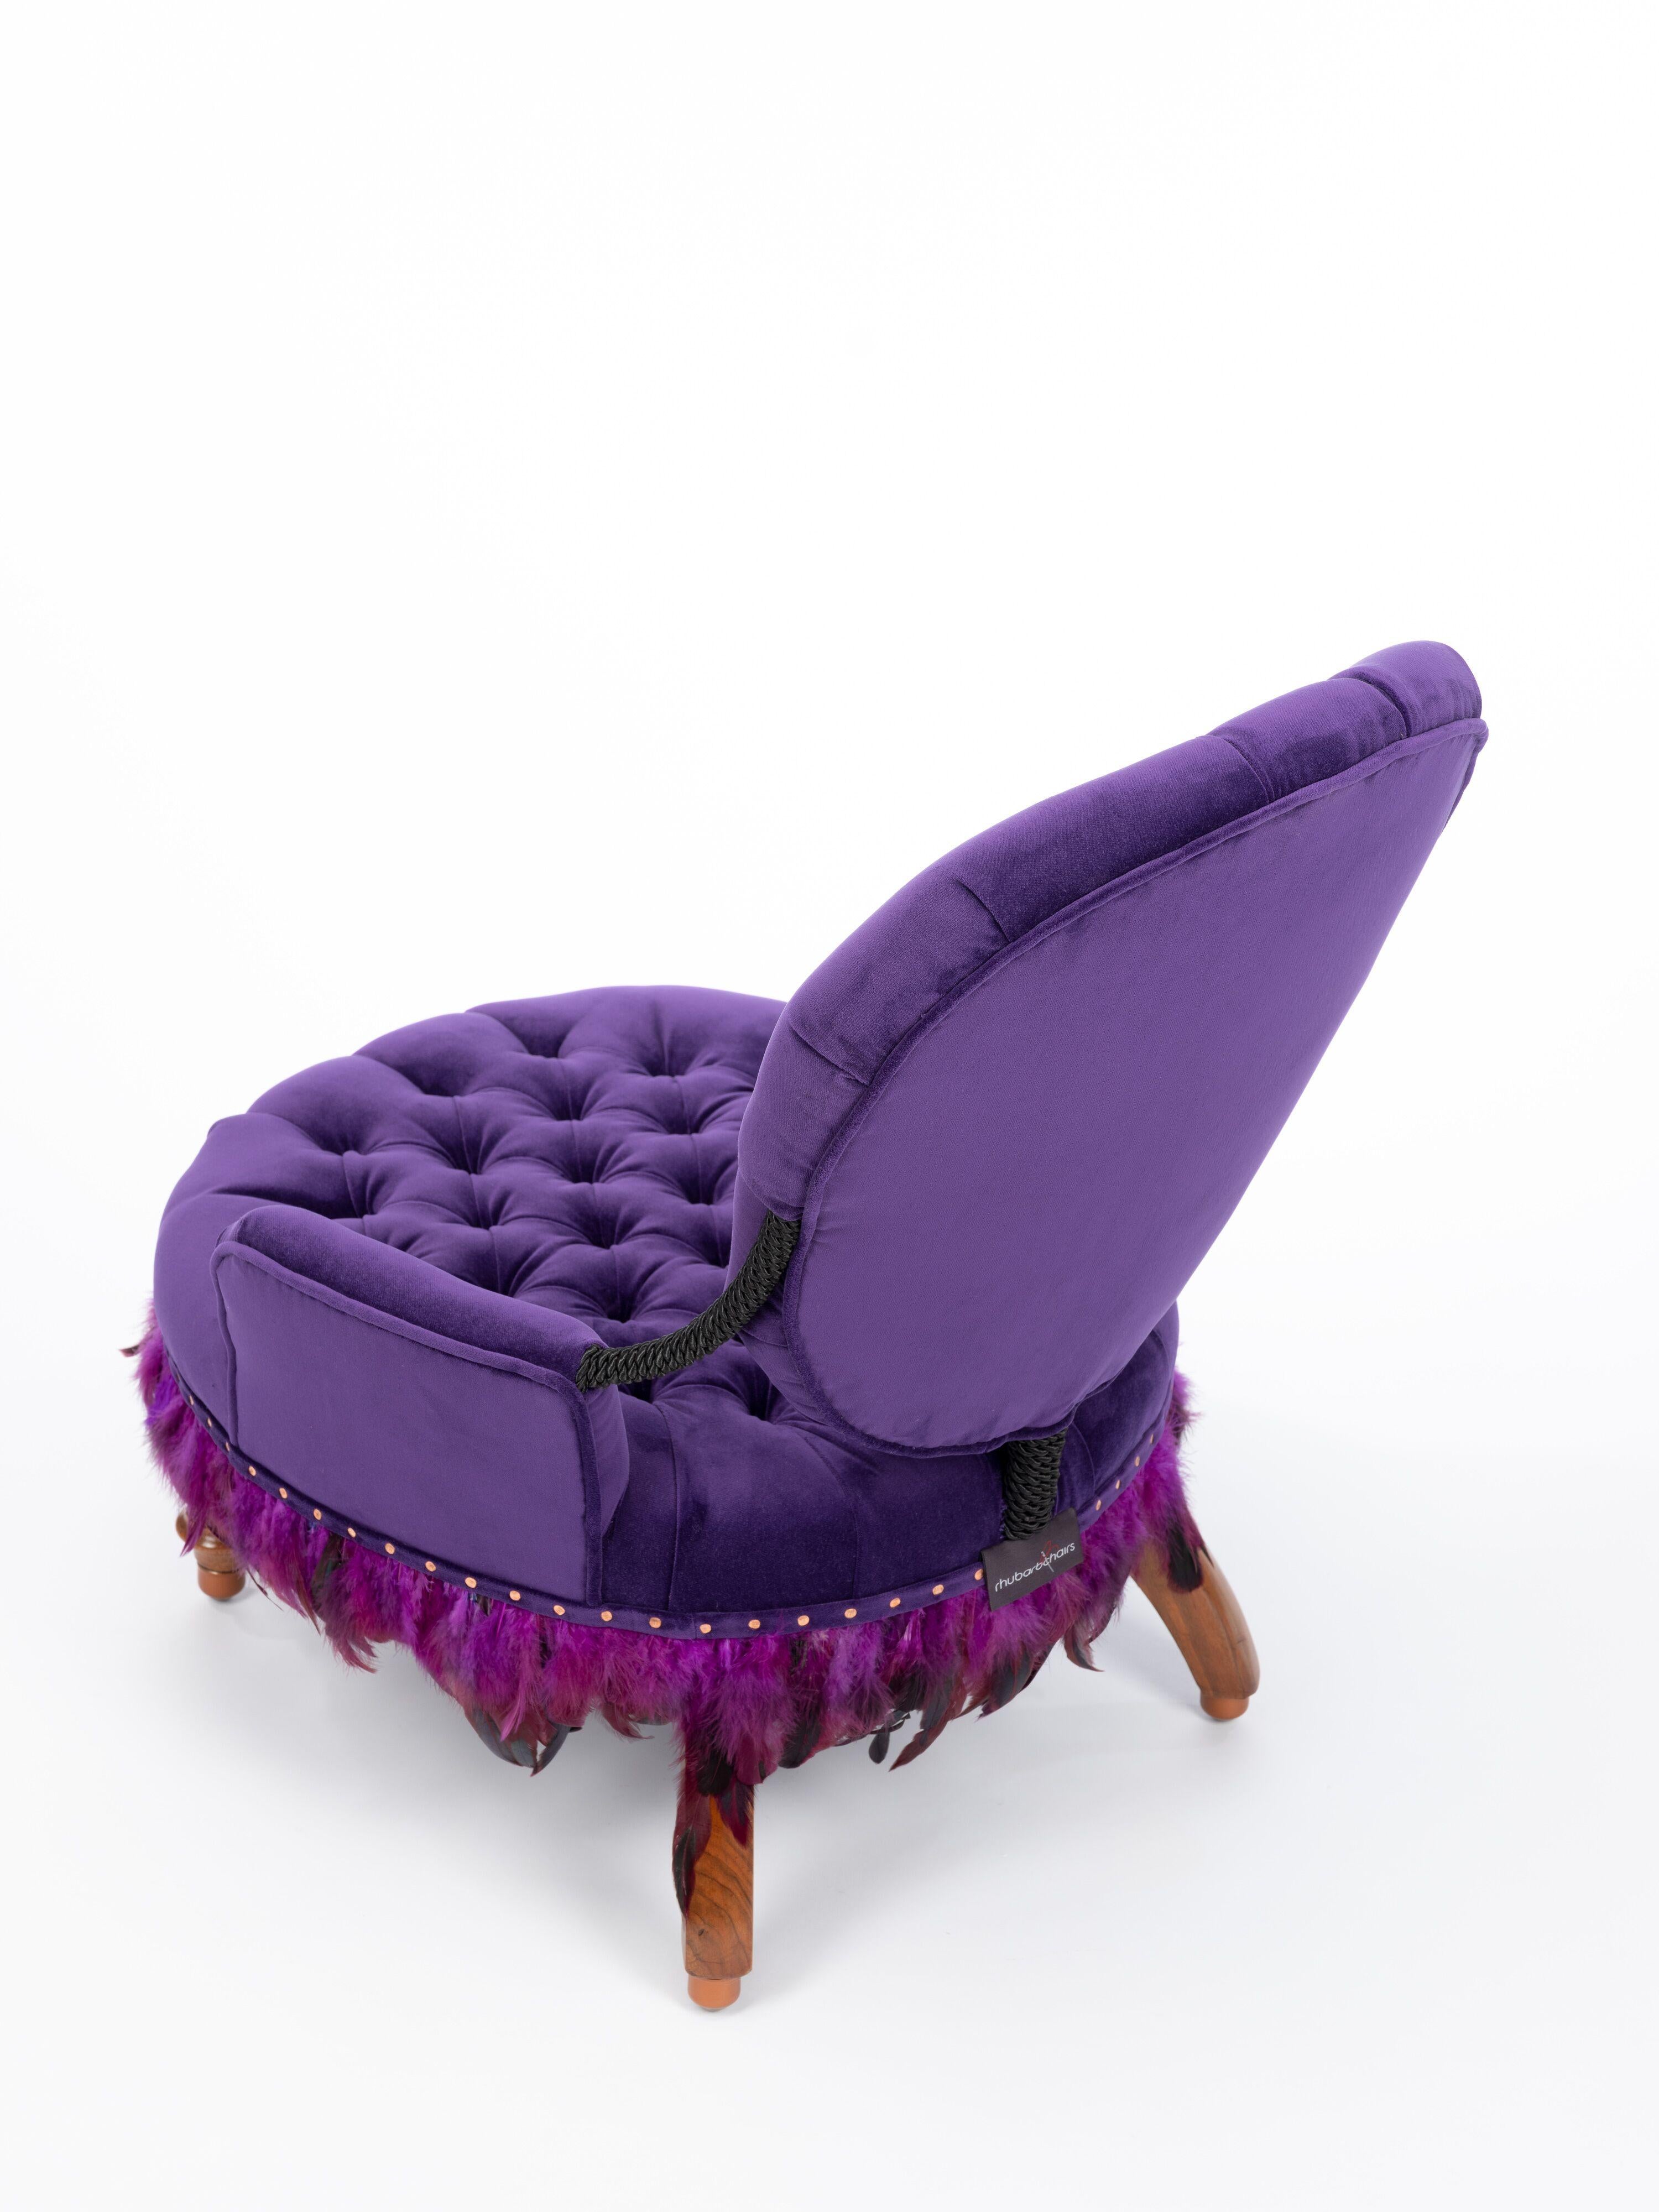 Rococo Revival Antique Salon Chair Purple Reign Burlesque Chair, France, circa 1875